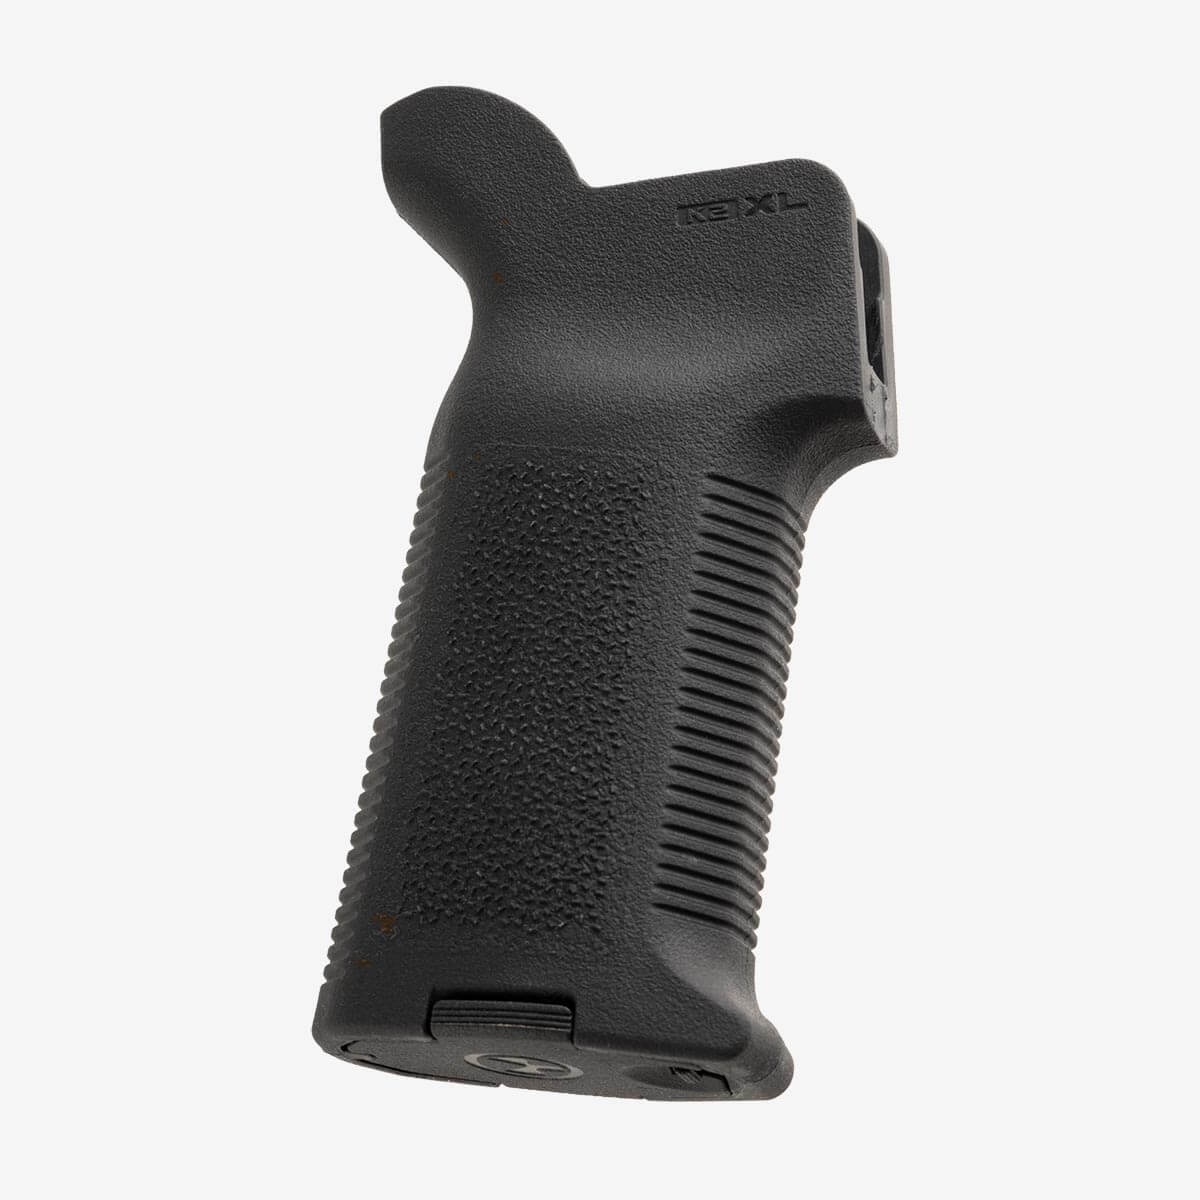 MOE® K2-XL Grip – AR15/M4 Black